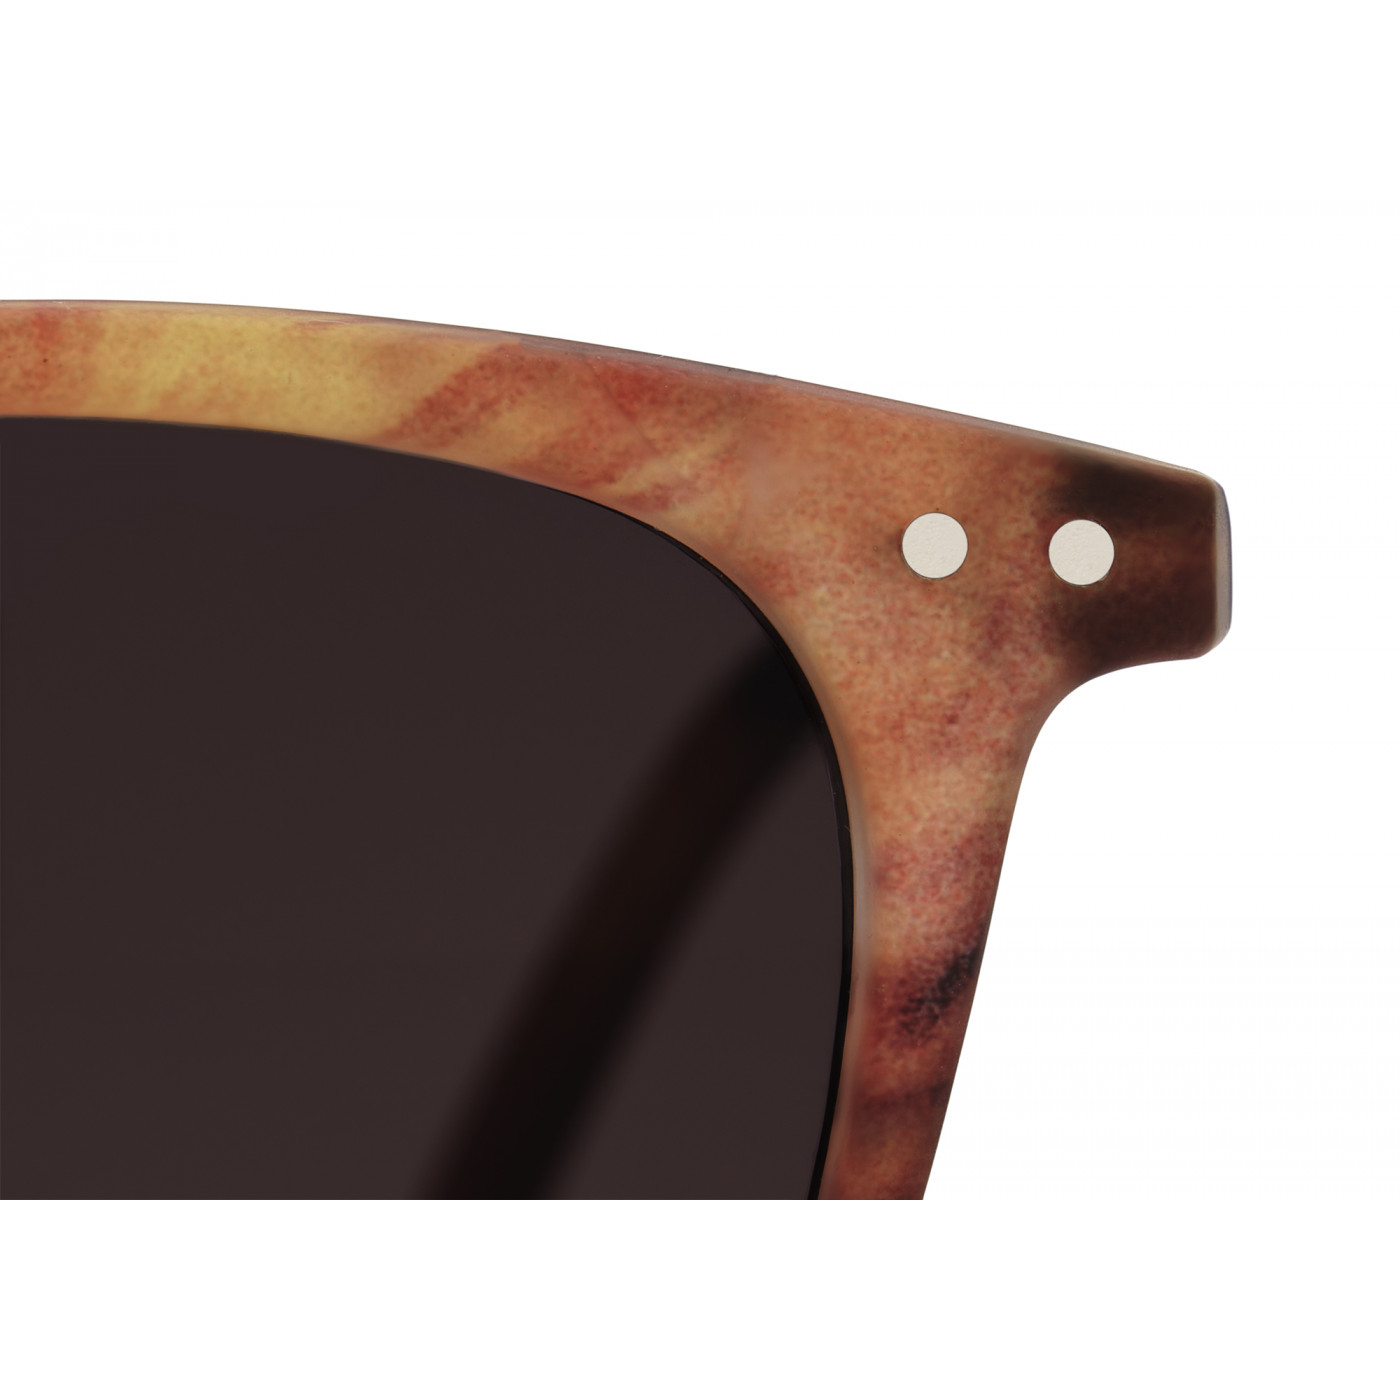 Sunglasses frame E Wild Bright by Izipizi Essentia collection for AW22